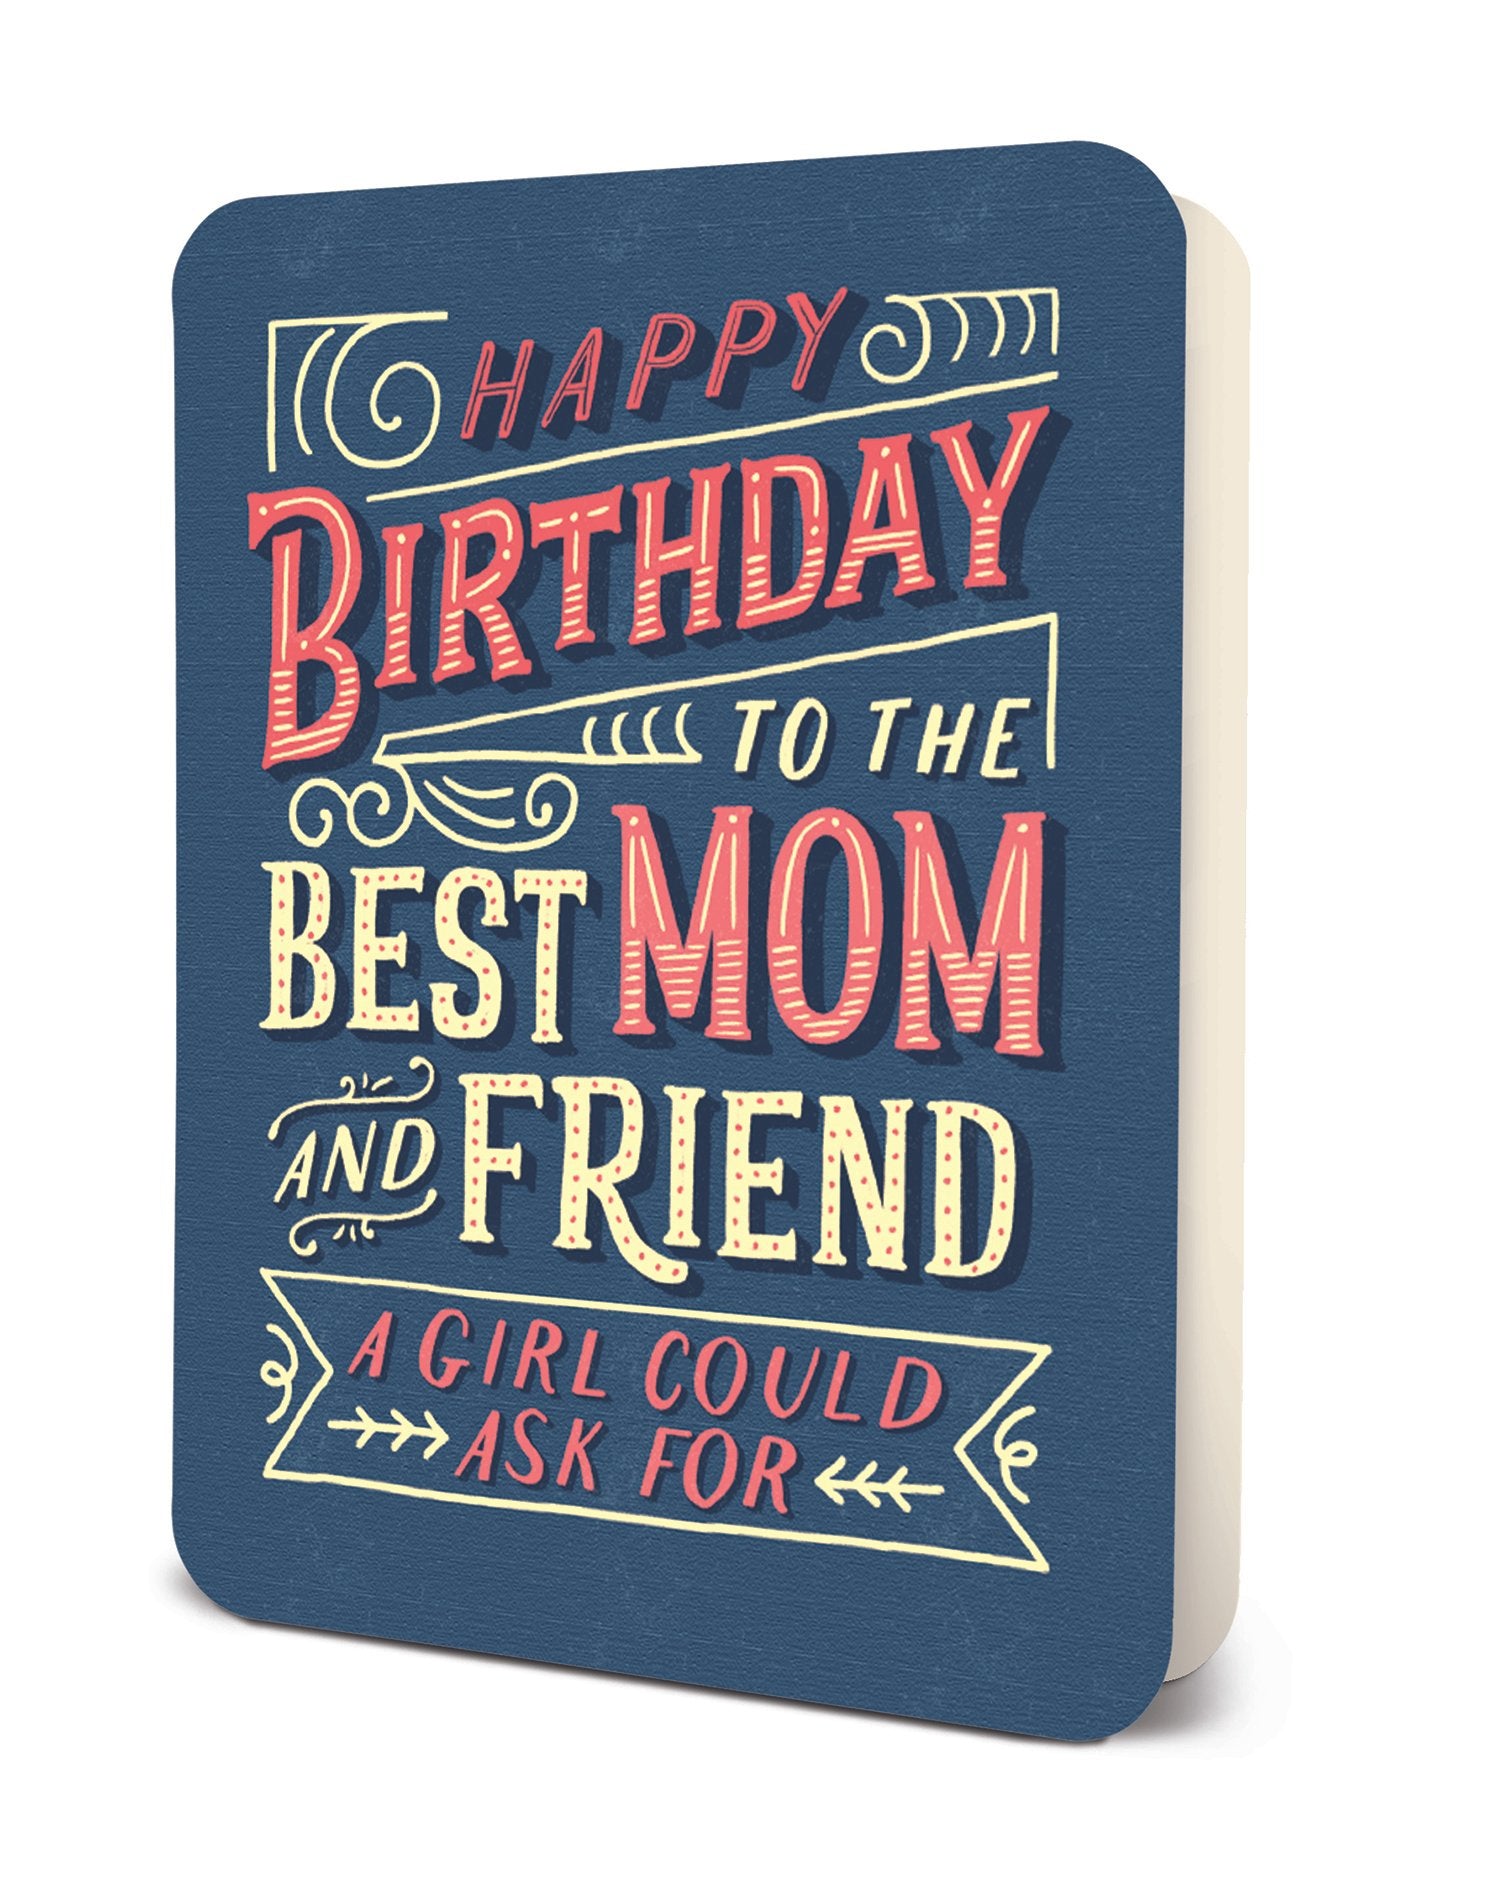 Best Mom and Friend BD - Greeting Card Greeting Card Orange Circle Studio